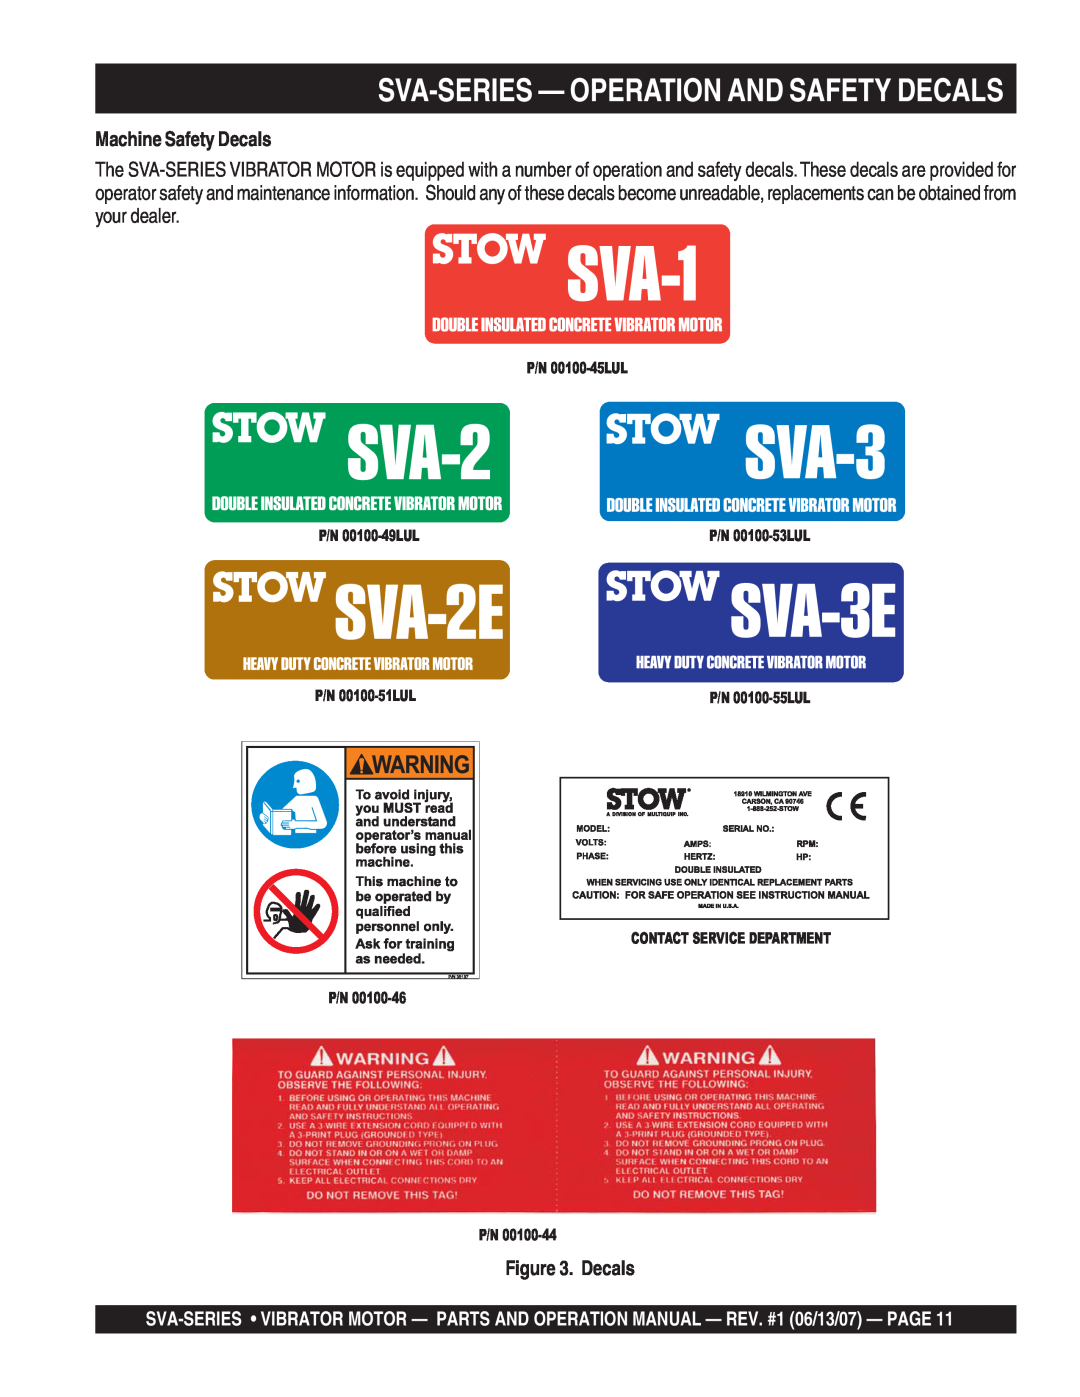 Stow SVA-3E, SVA-2E, SVA-1 manual Sva-Series - Operation And Safety Decals, Machine Safety Decals 